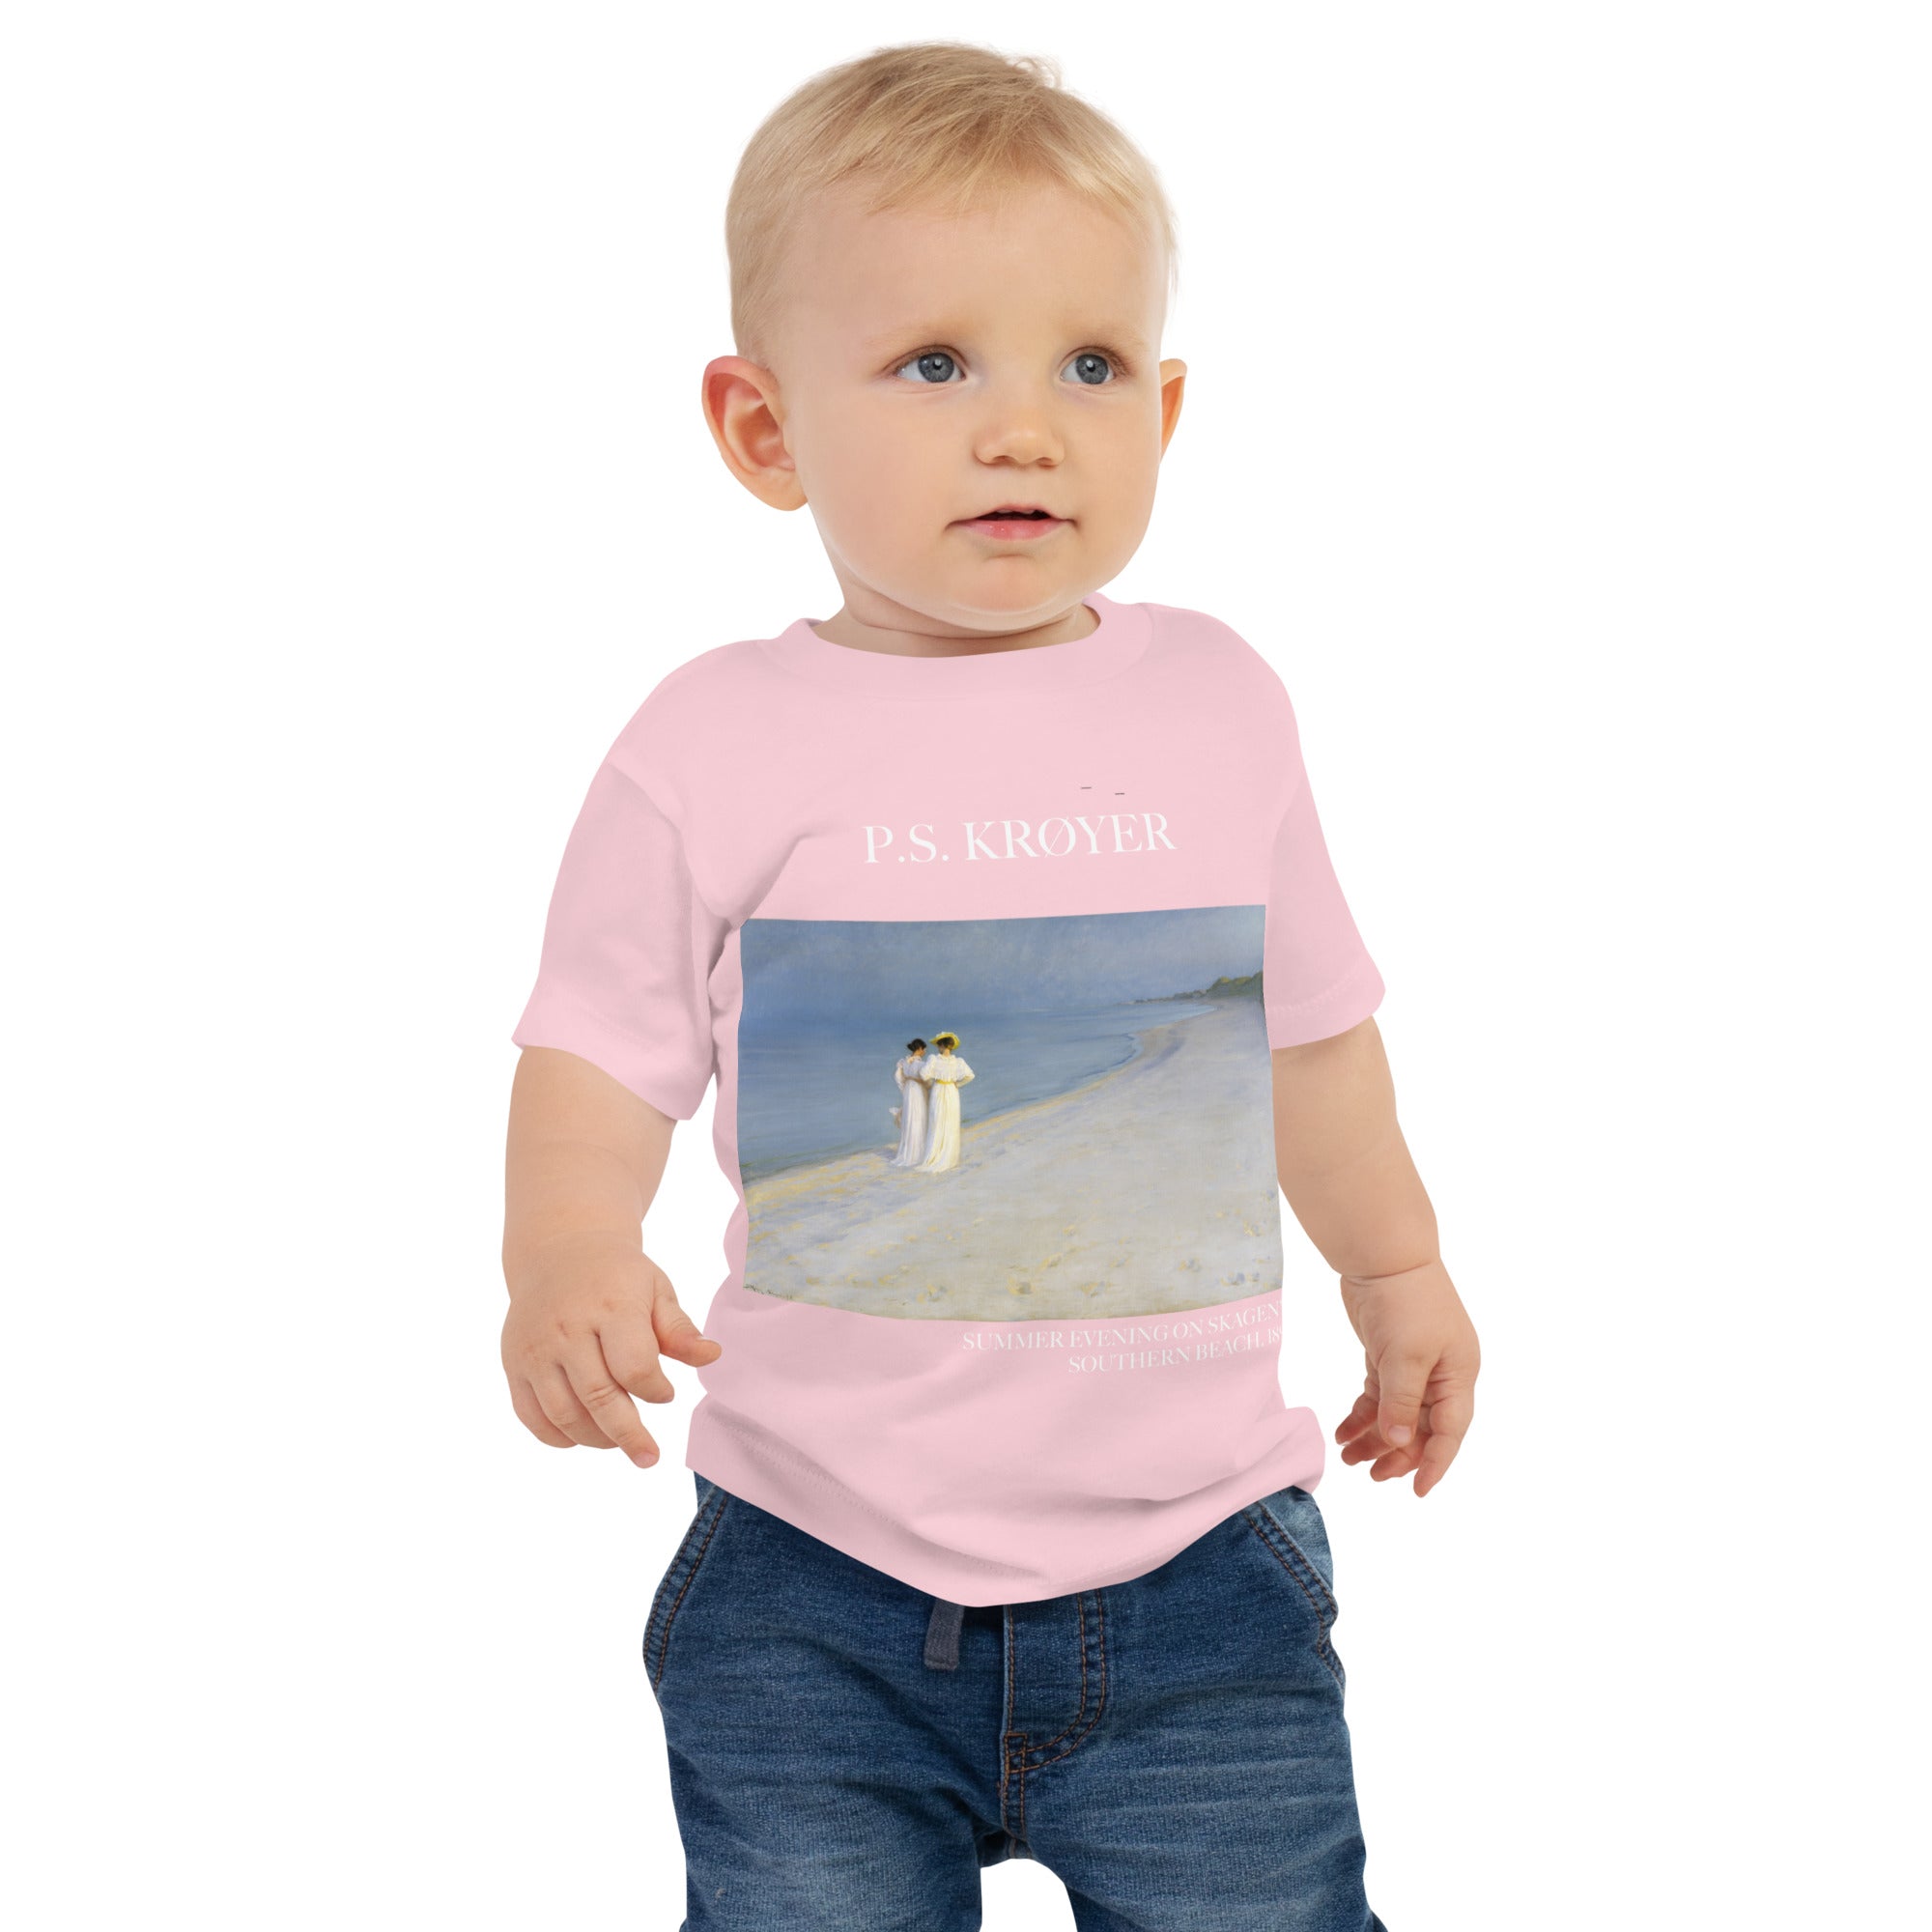 P.S. Krøyer 'Summer Evening on Skagen's Southern Beach' Famous Painting Baby Staple T-Shirt | Premium Baby Art Tee